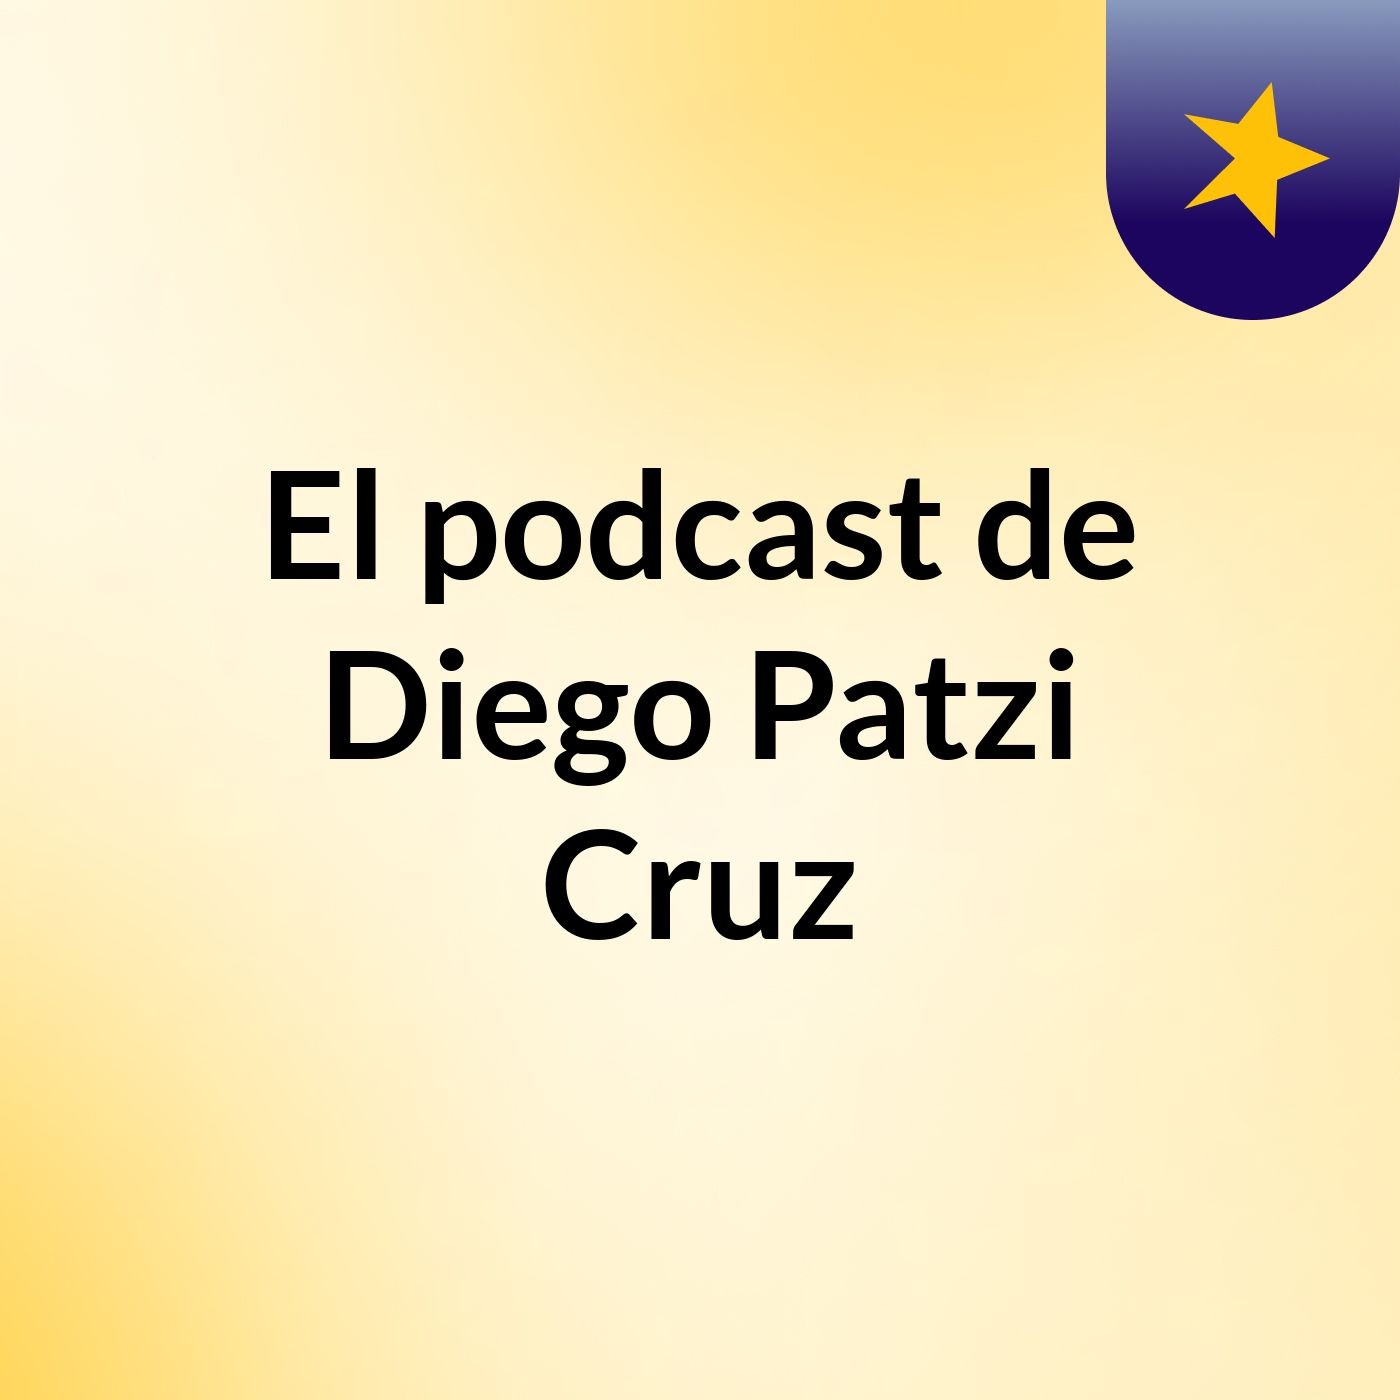 El podcast de Diego Patzi Cruz